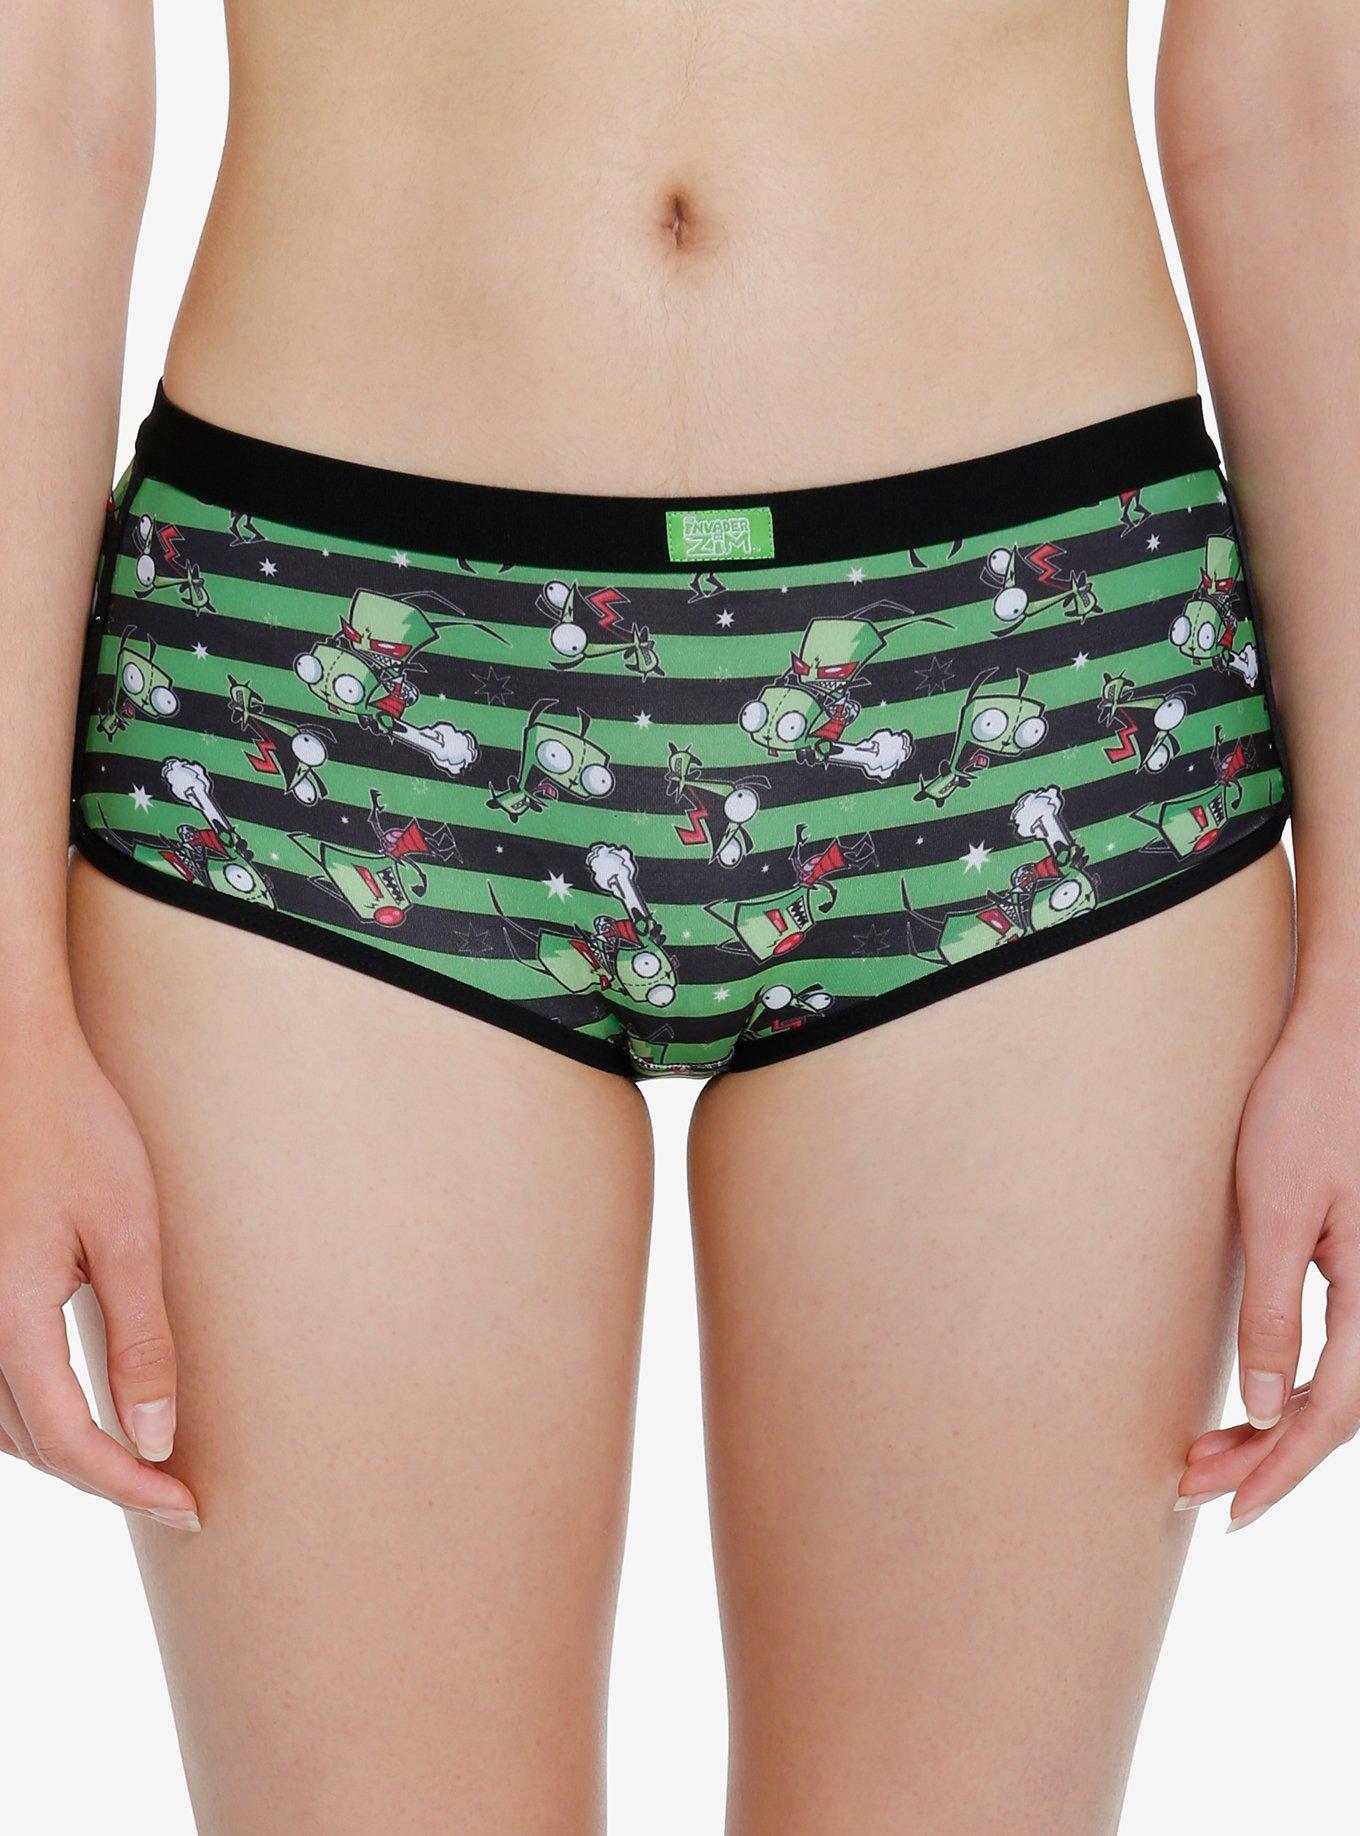 Cute Underwear Unicorn Panties - Well Pick